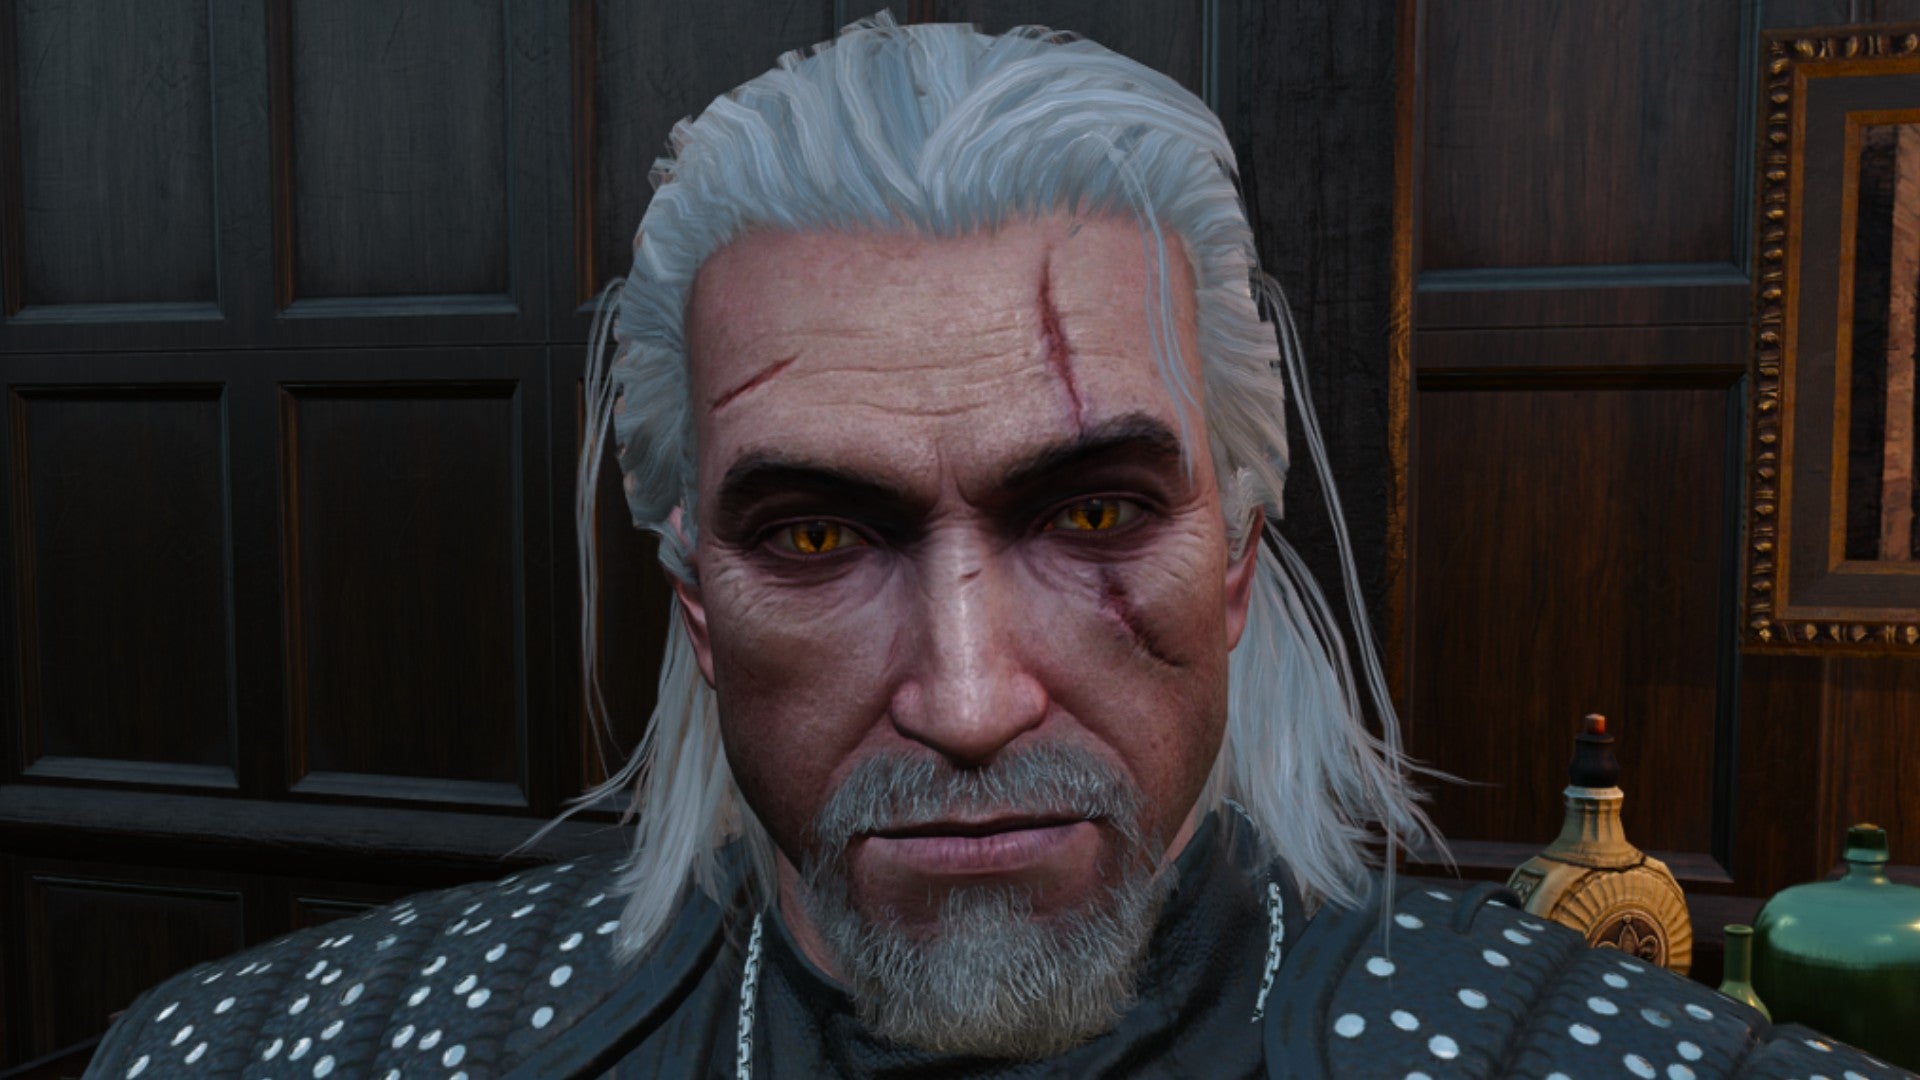 Imagen de Witcher 3 que muestra a Geralt con perilla.